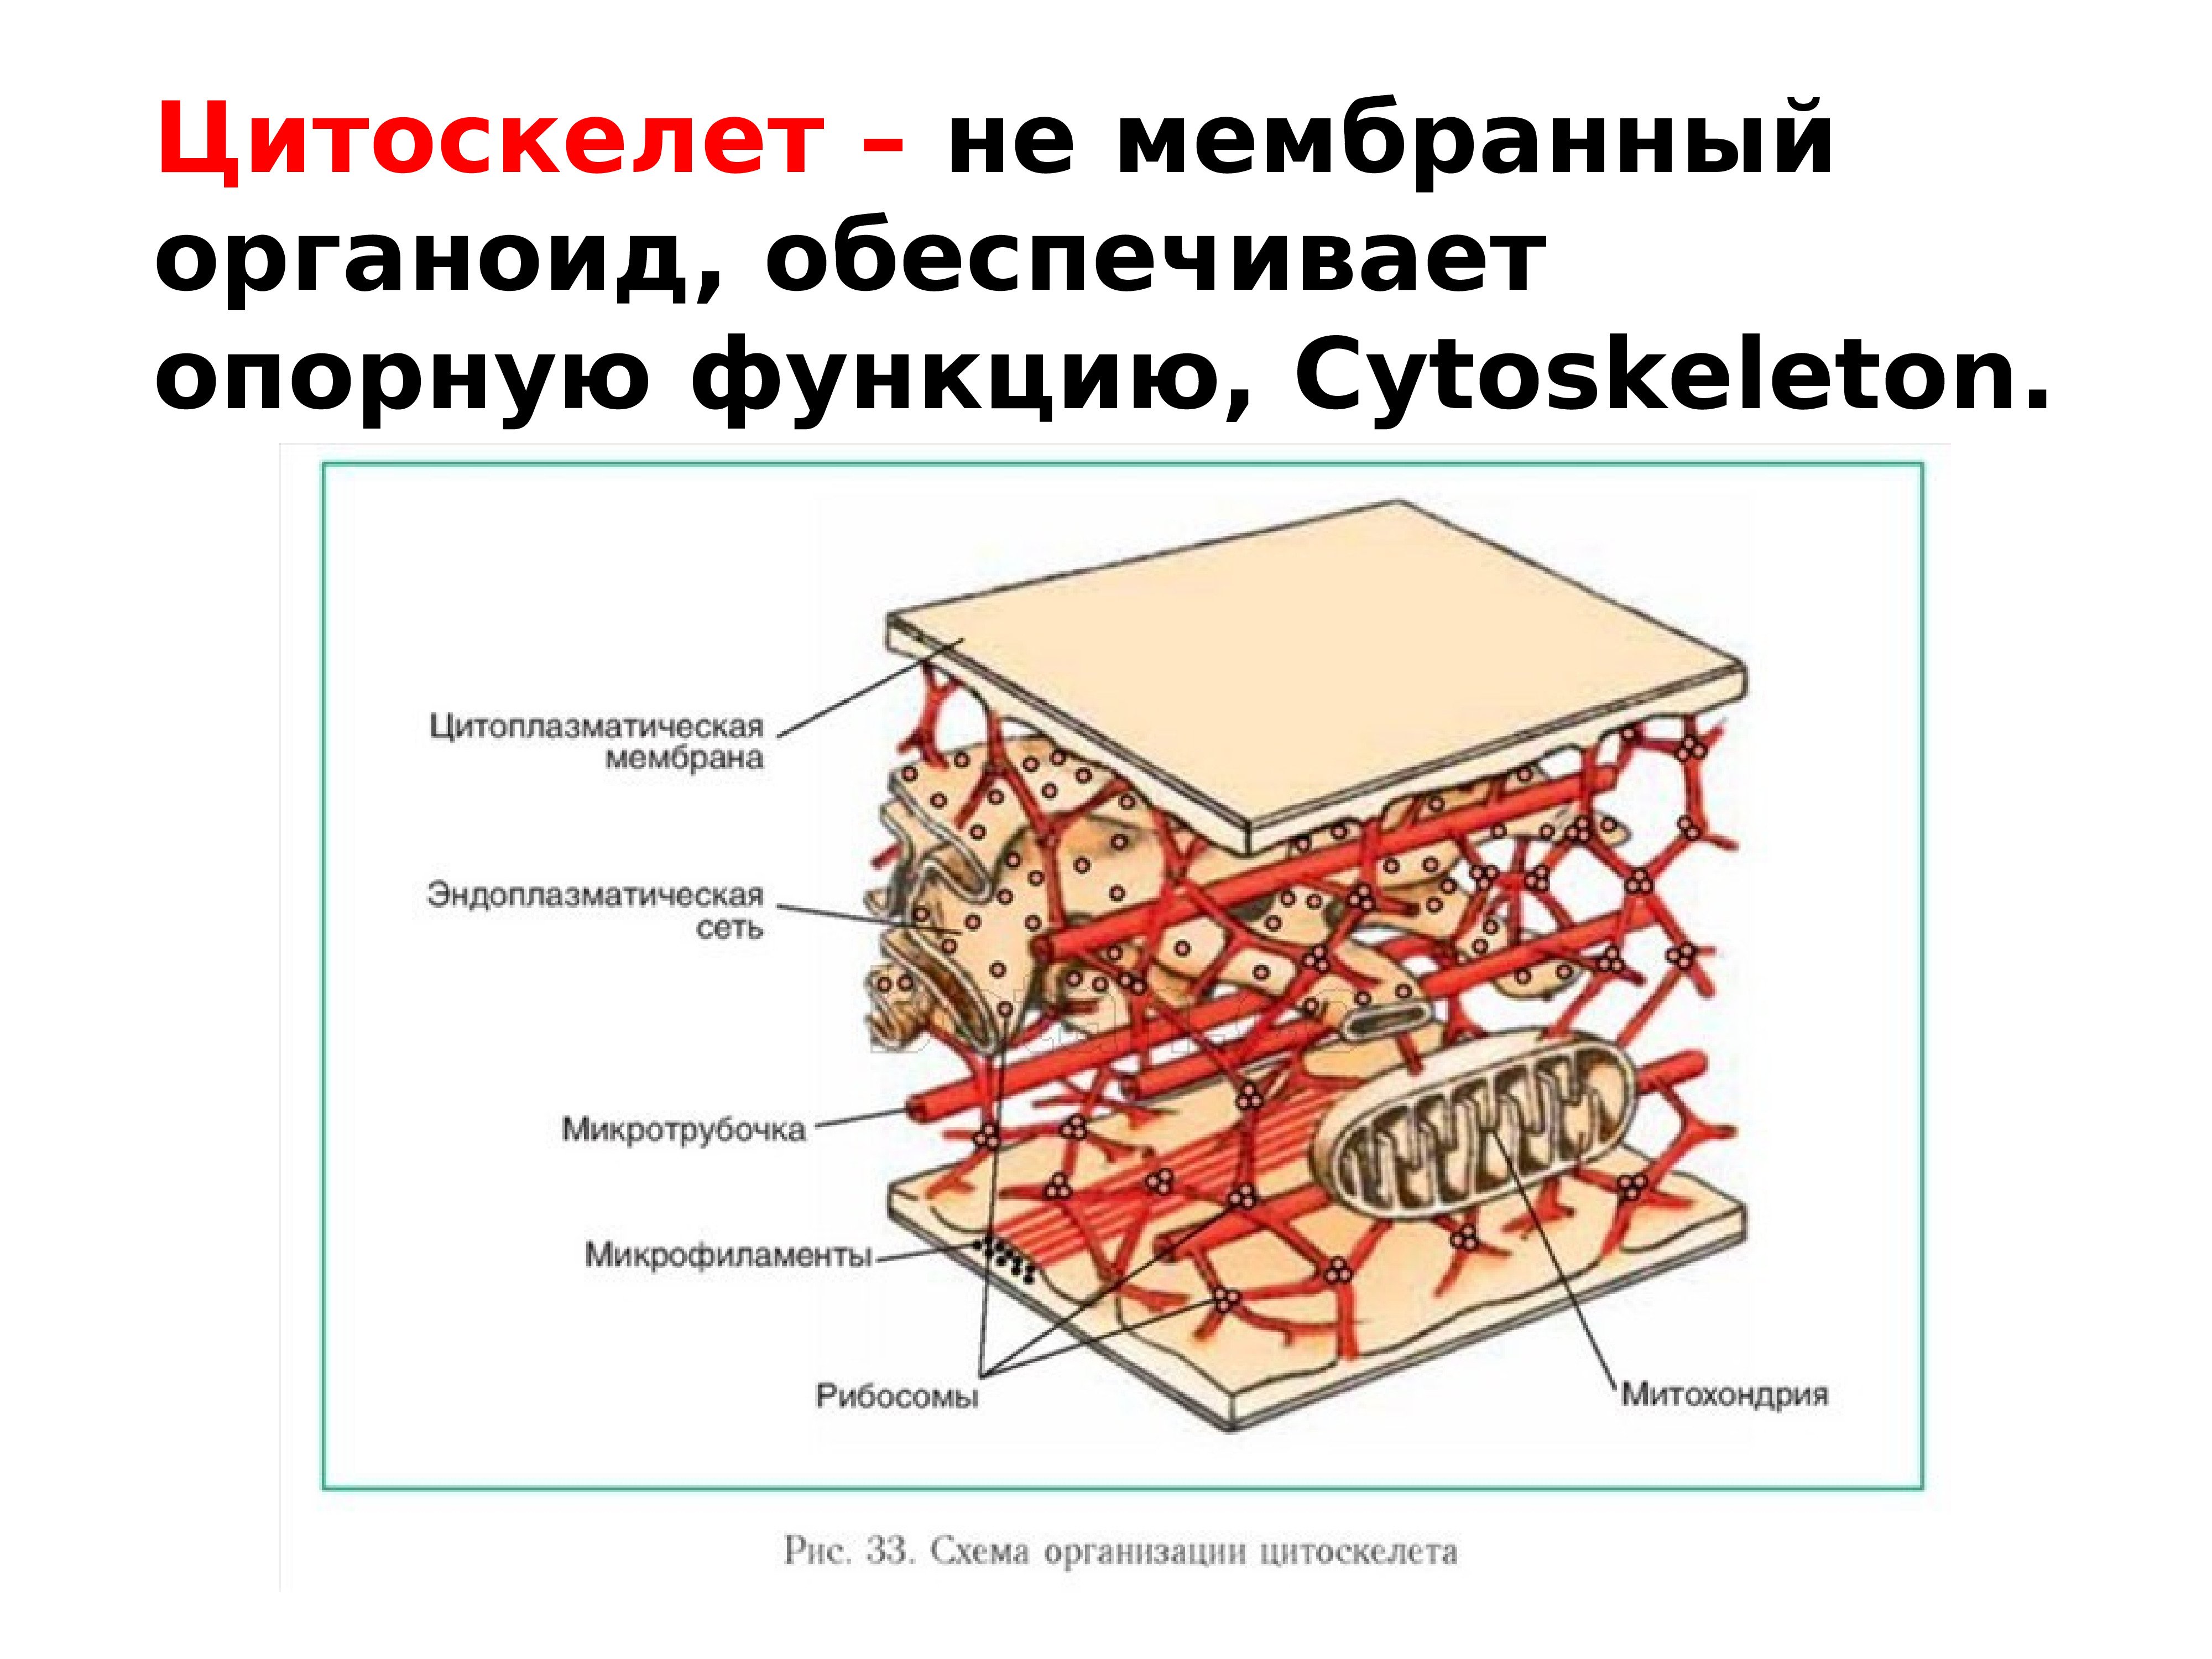 Цитоскелет схема ЕГЭ. Цитоскелет рисунок. Цитоскелет строение. Цитоскелет строение схематично. Цитоскелет клетки какой органоид